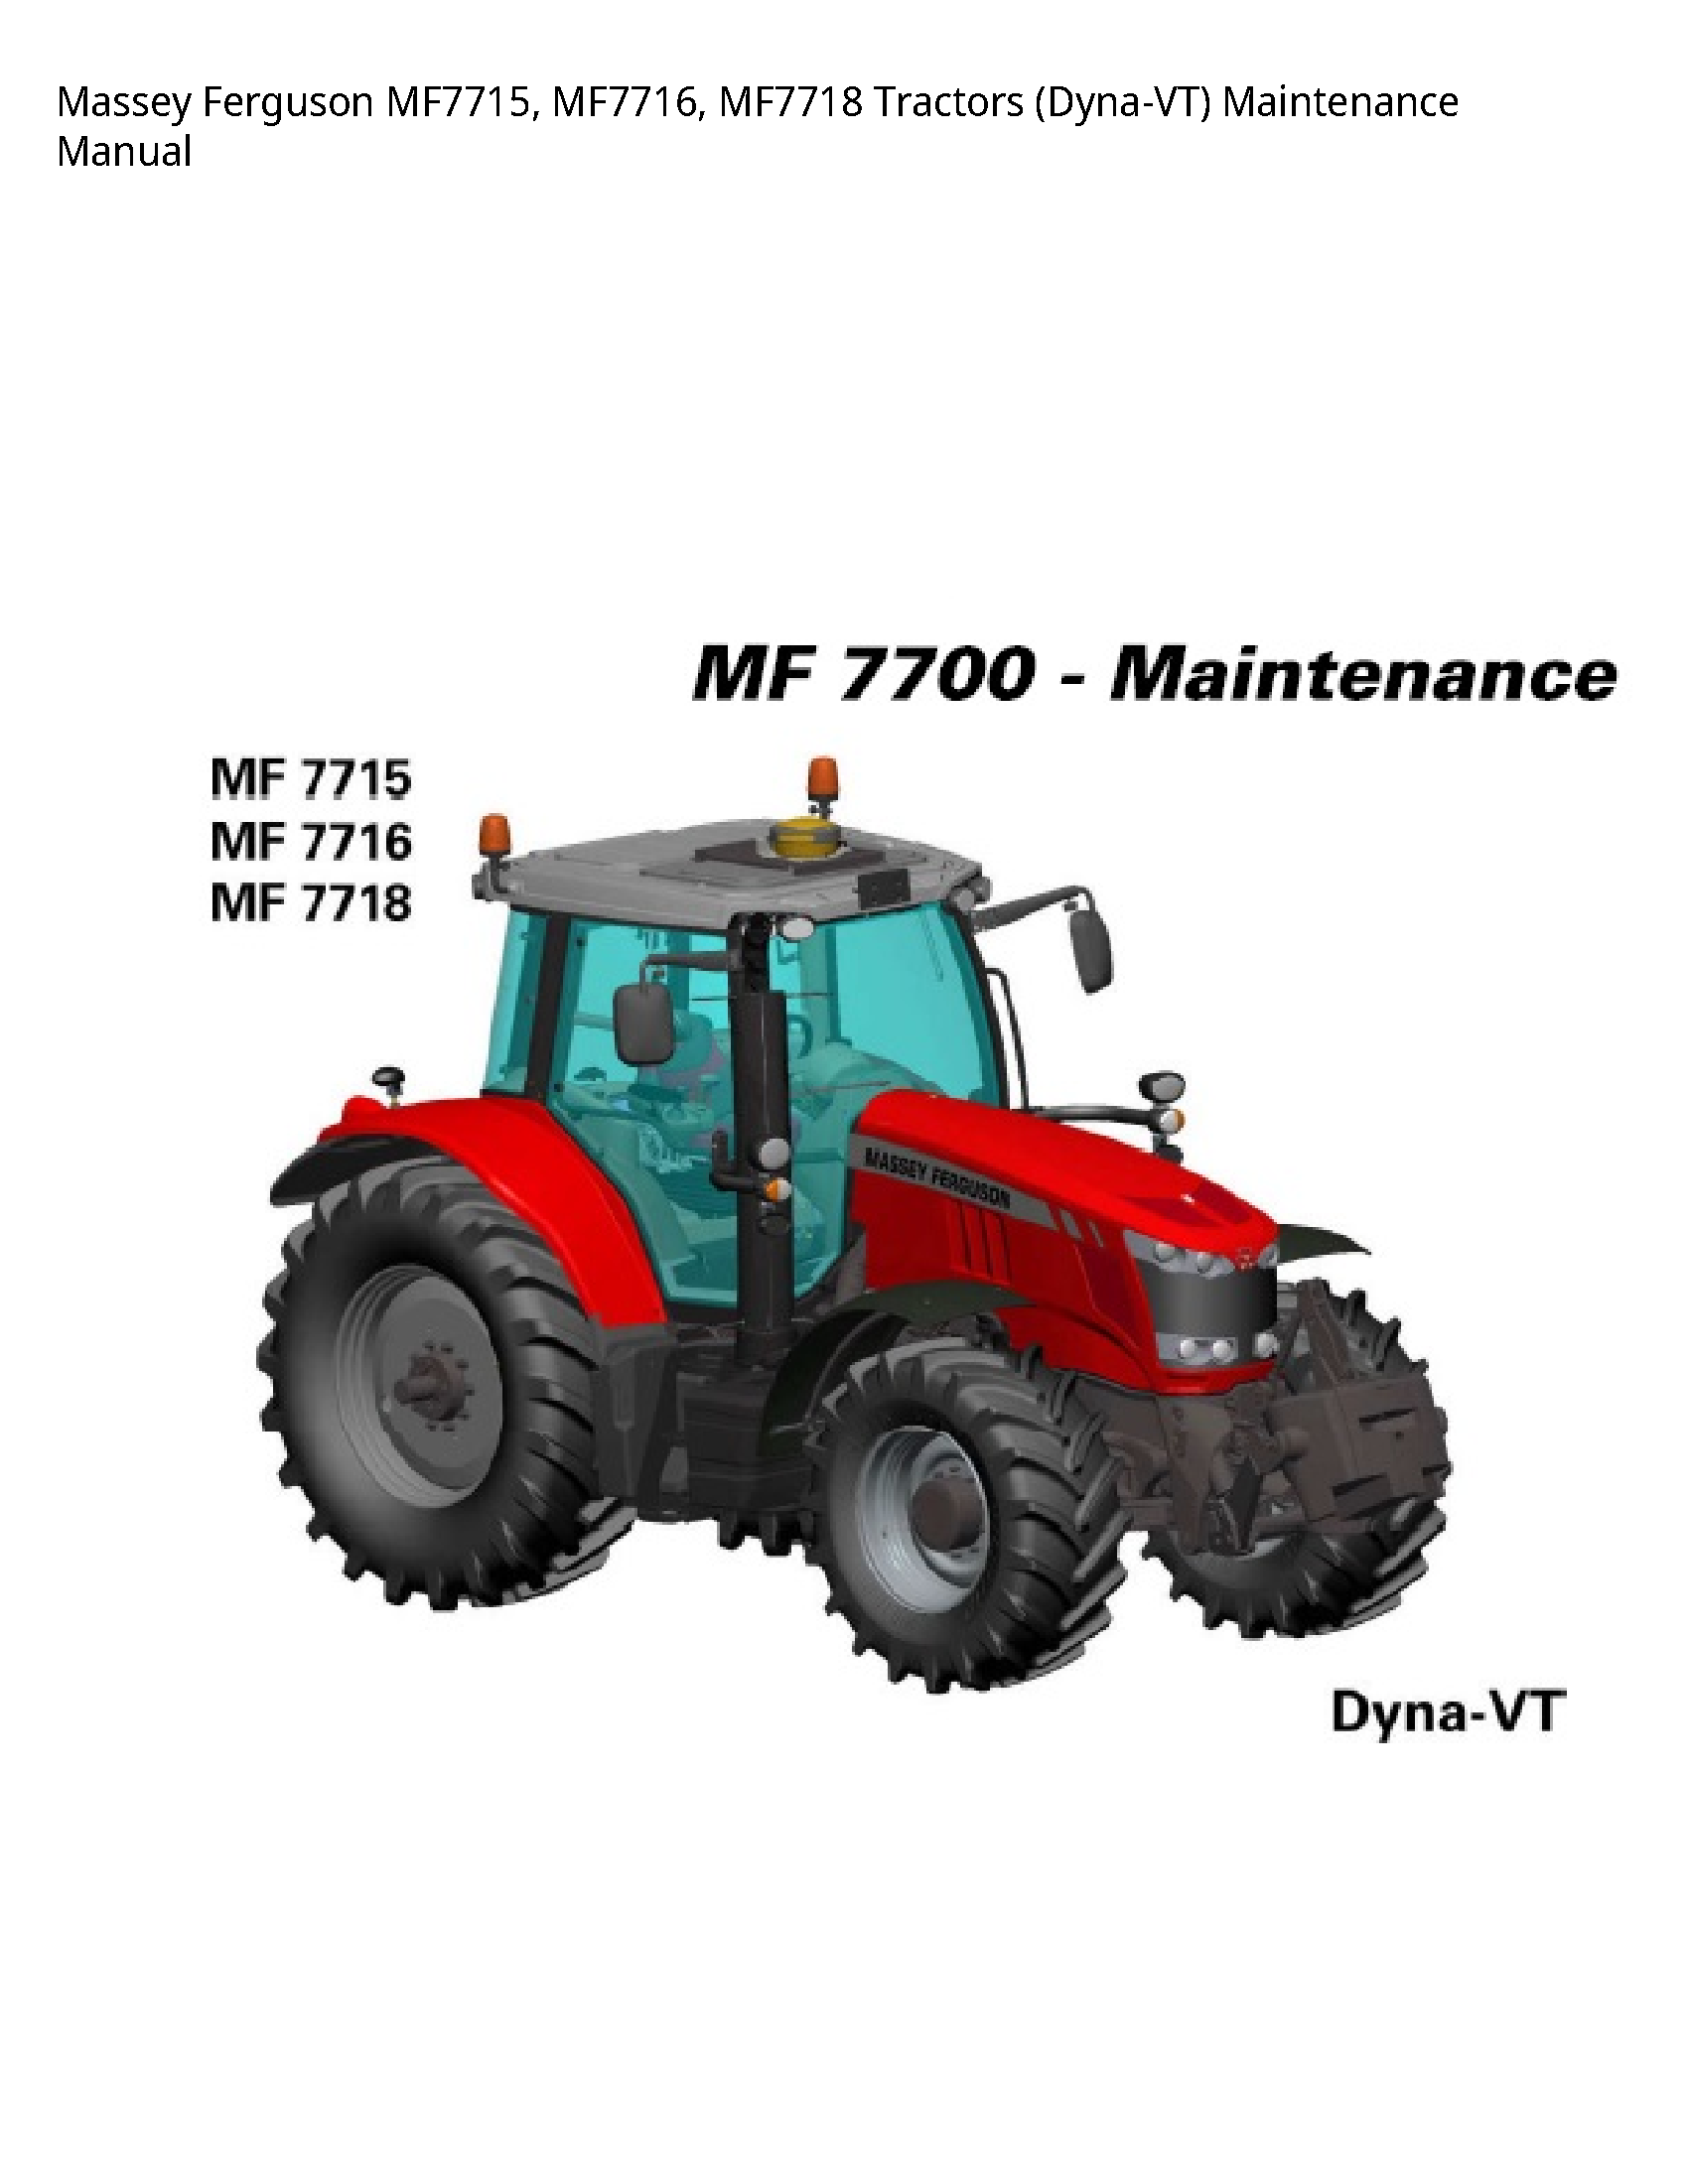 Massey Ferguson MF7715 Tractors (Dyna-VT) Maintenance manual